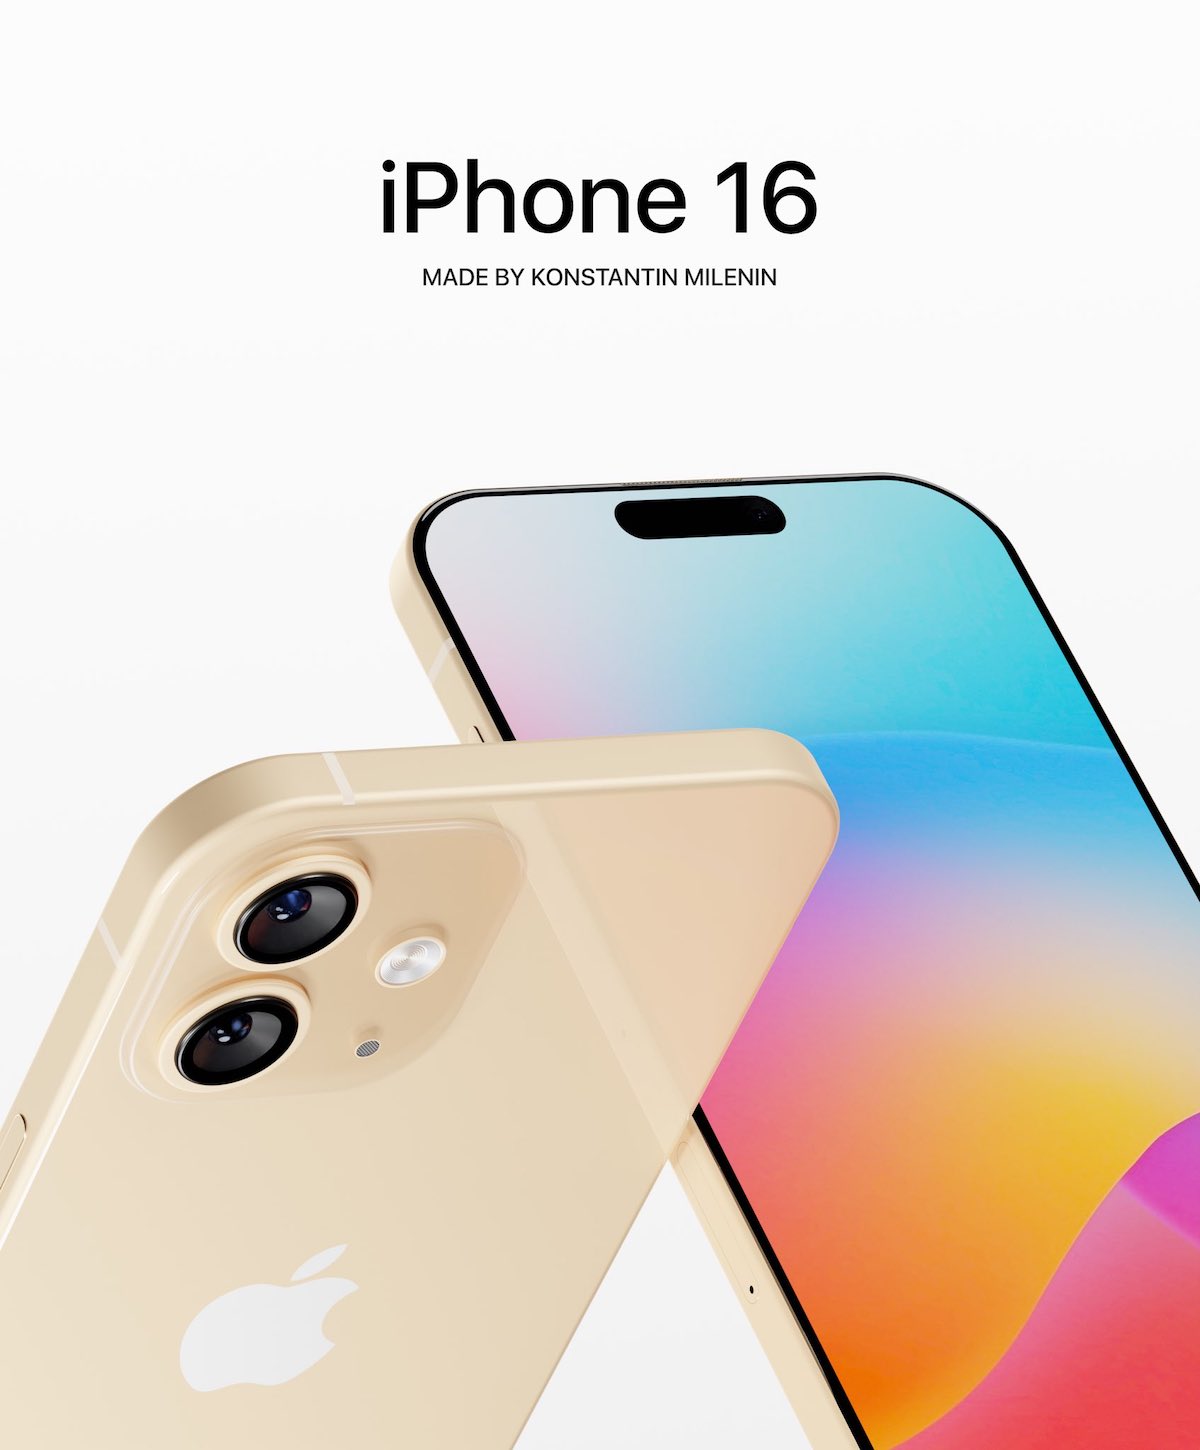 iPhone16発表日は9月10日、価格は15,000円値上げの可能性あり